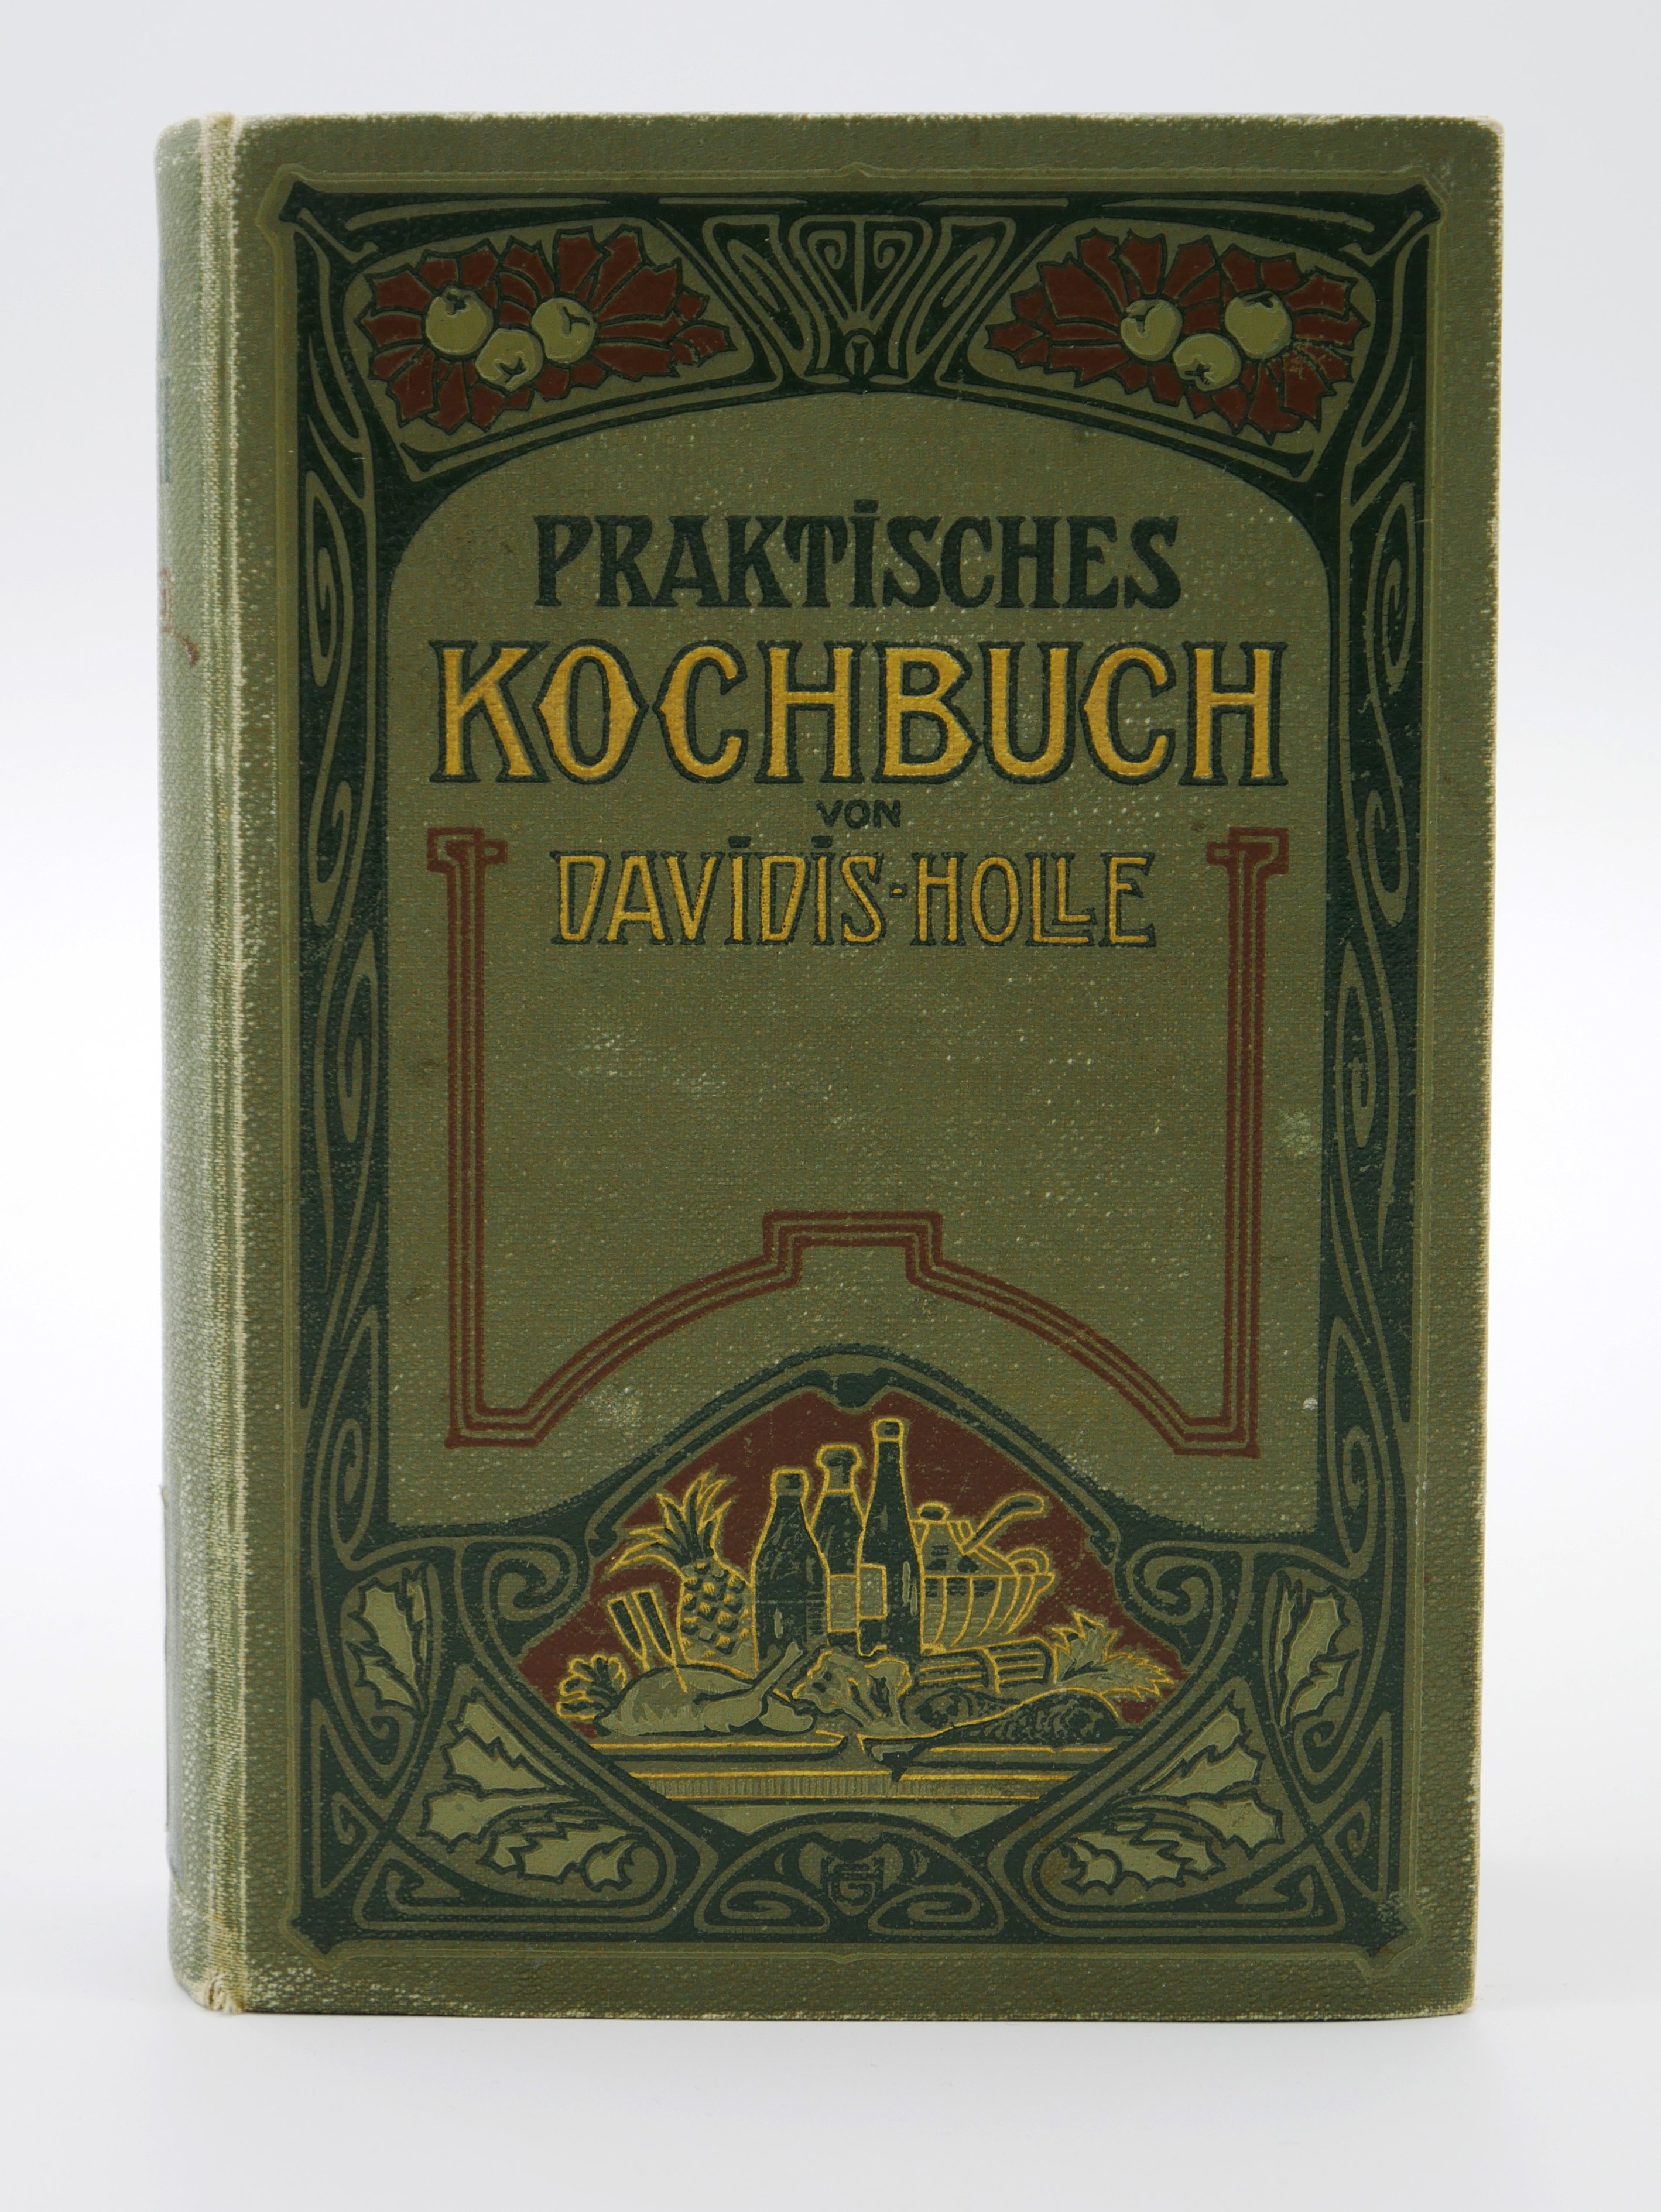 Kochbuch: Henriette Davidis, Luise Holle: "Praktisches Kochbuch" (1910) (Deutsches Kochbuchmuseum CC BY-NC-SA)